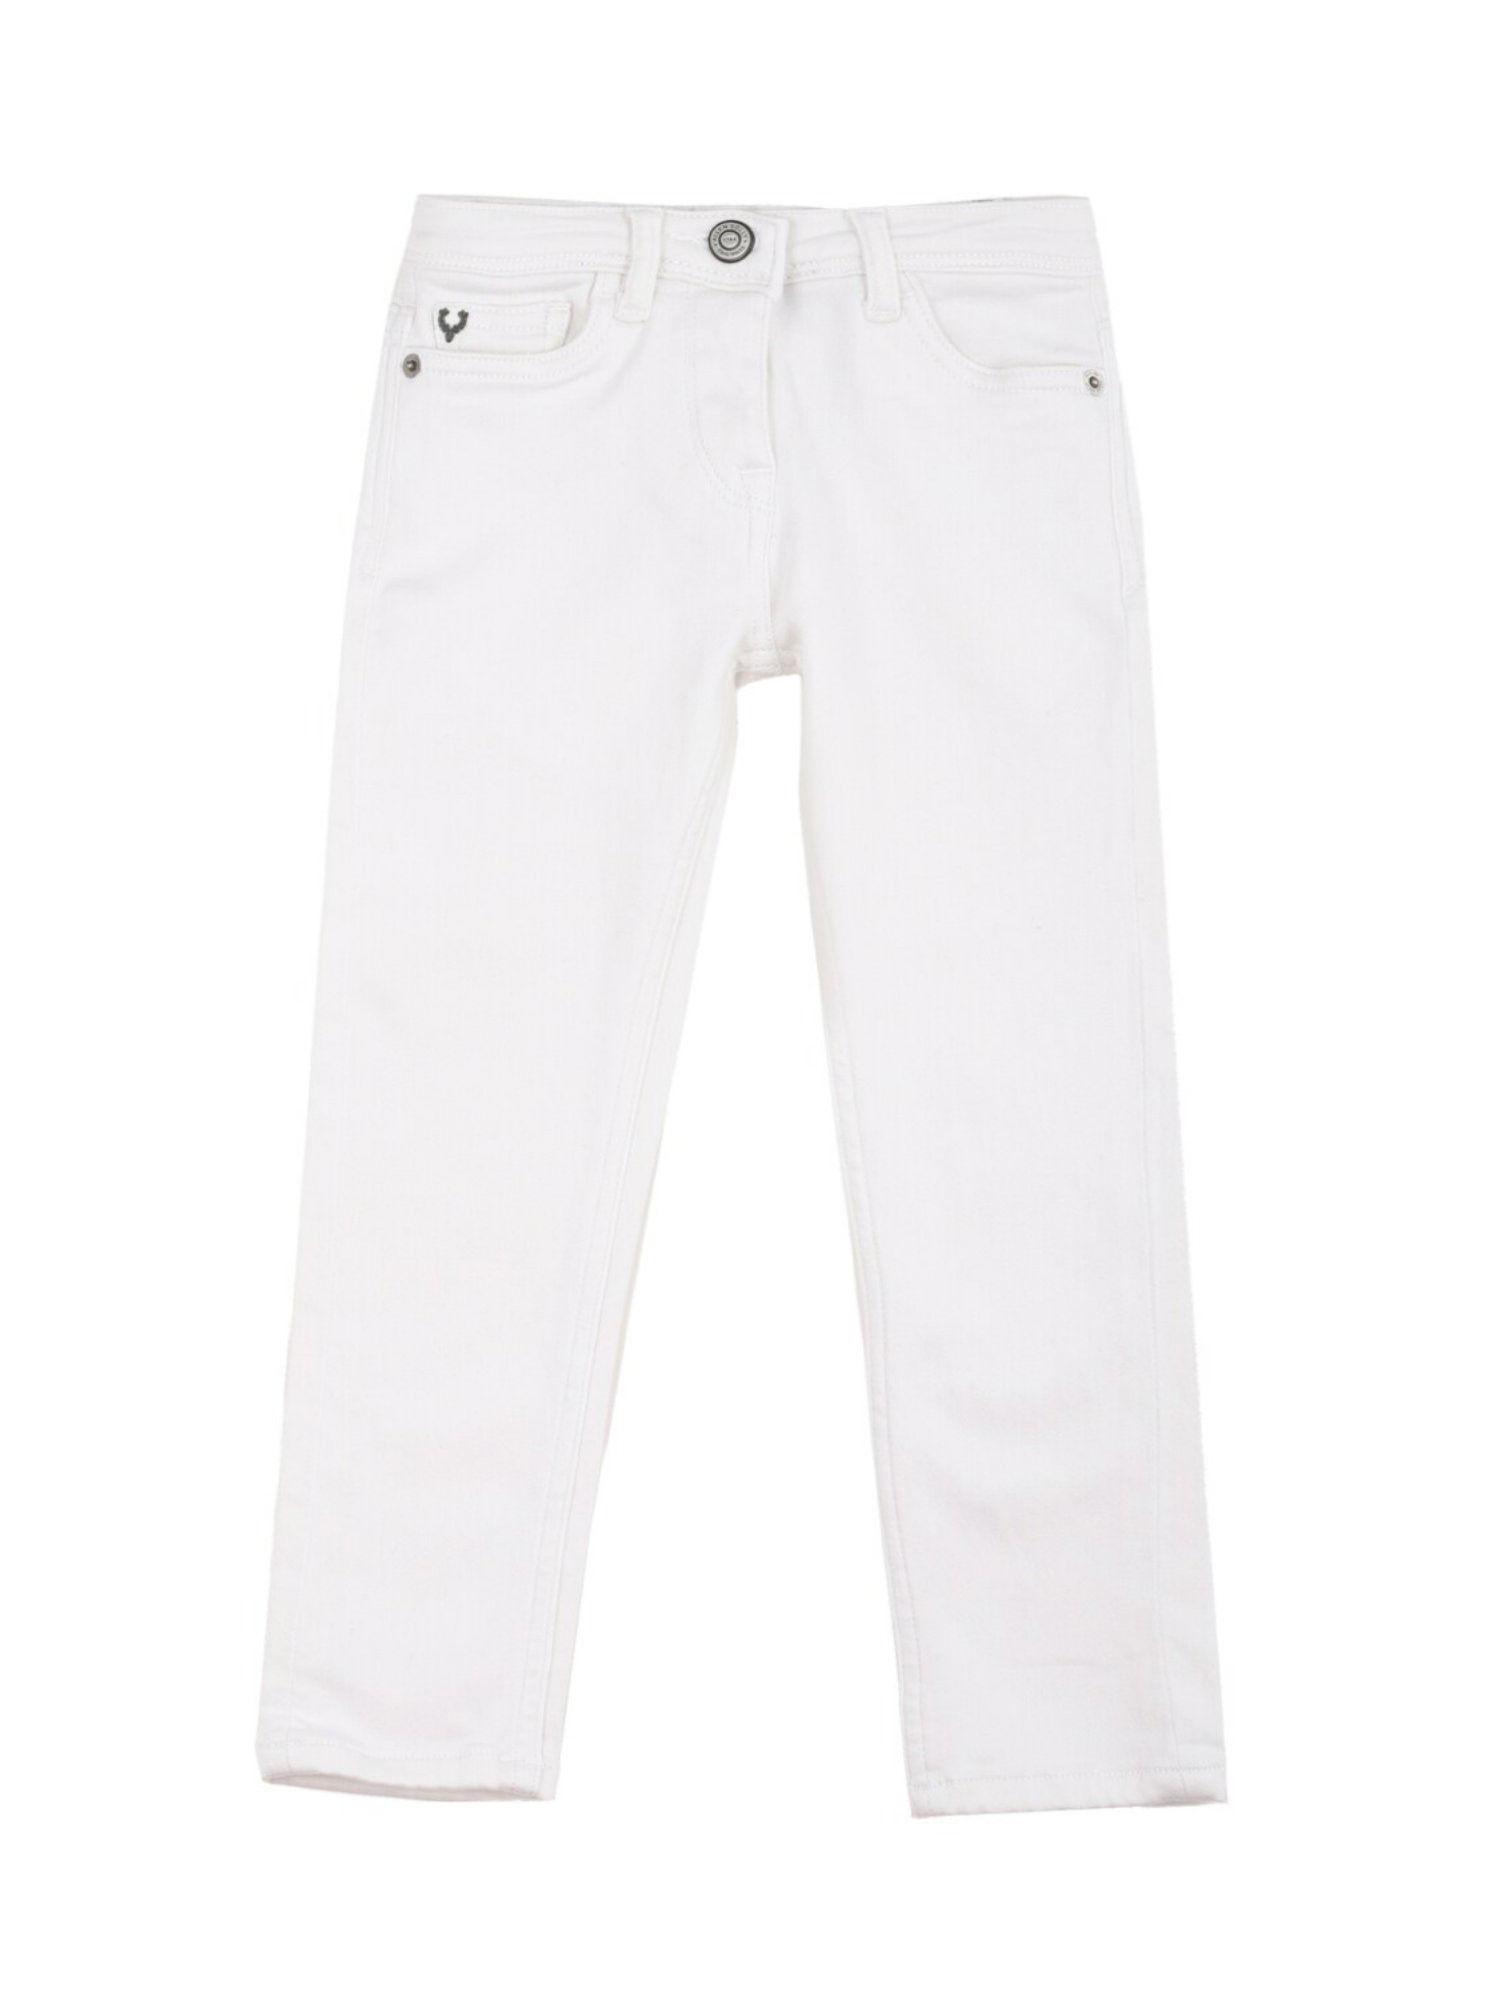 girls-white-slim-fit-jeans